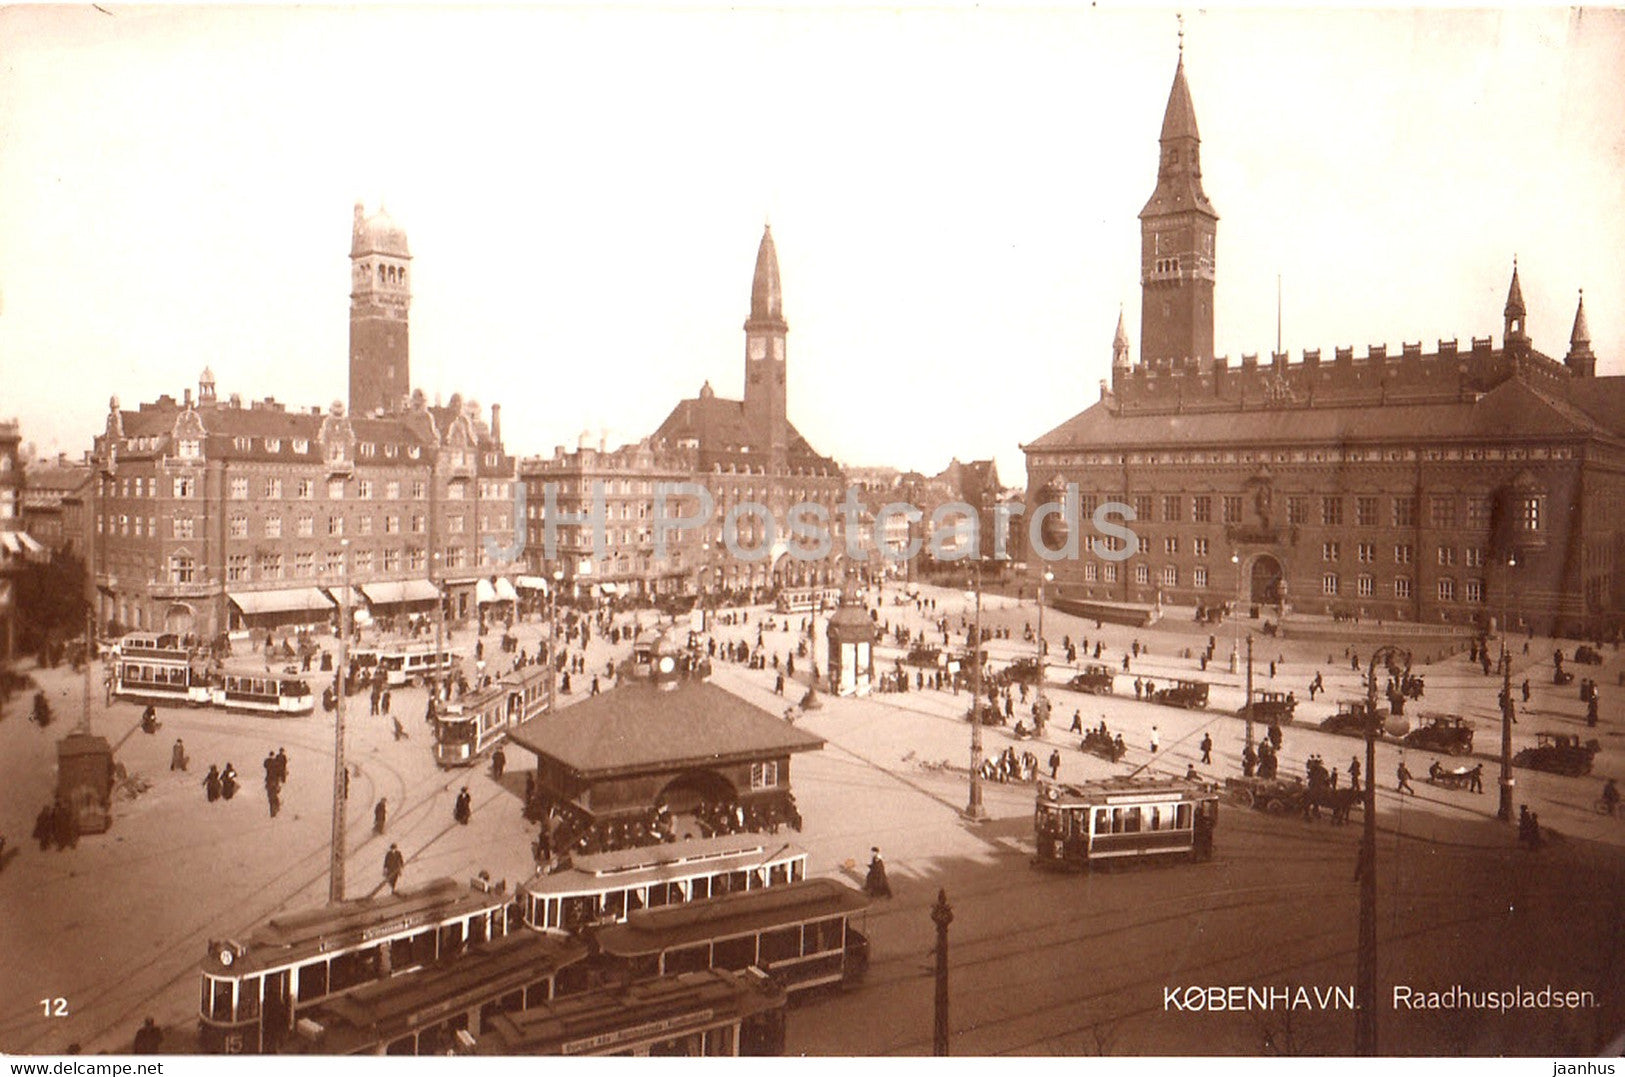 Copenhagen - Kobenhavn - Raadhuspladsen - tram - 12 - old postcard - 1919 - Denmark - used - JH Postcards